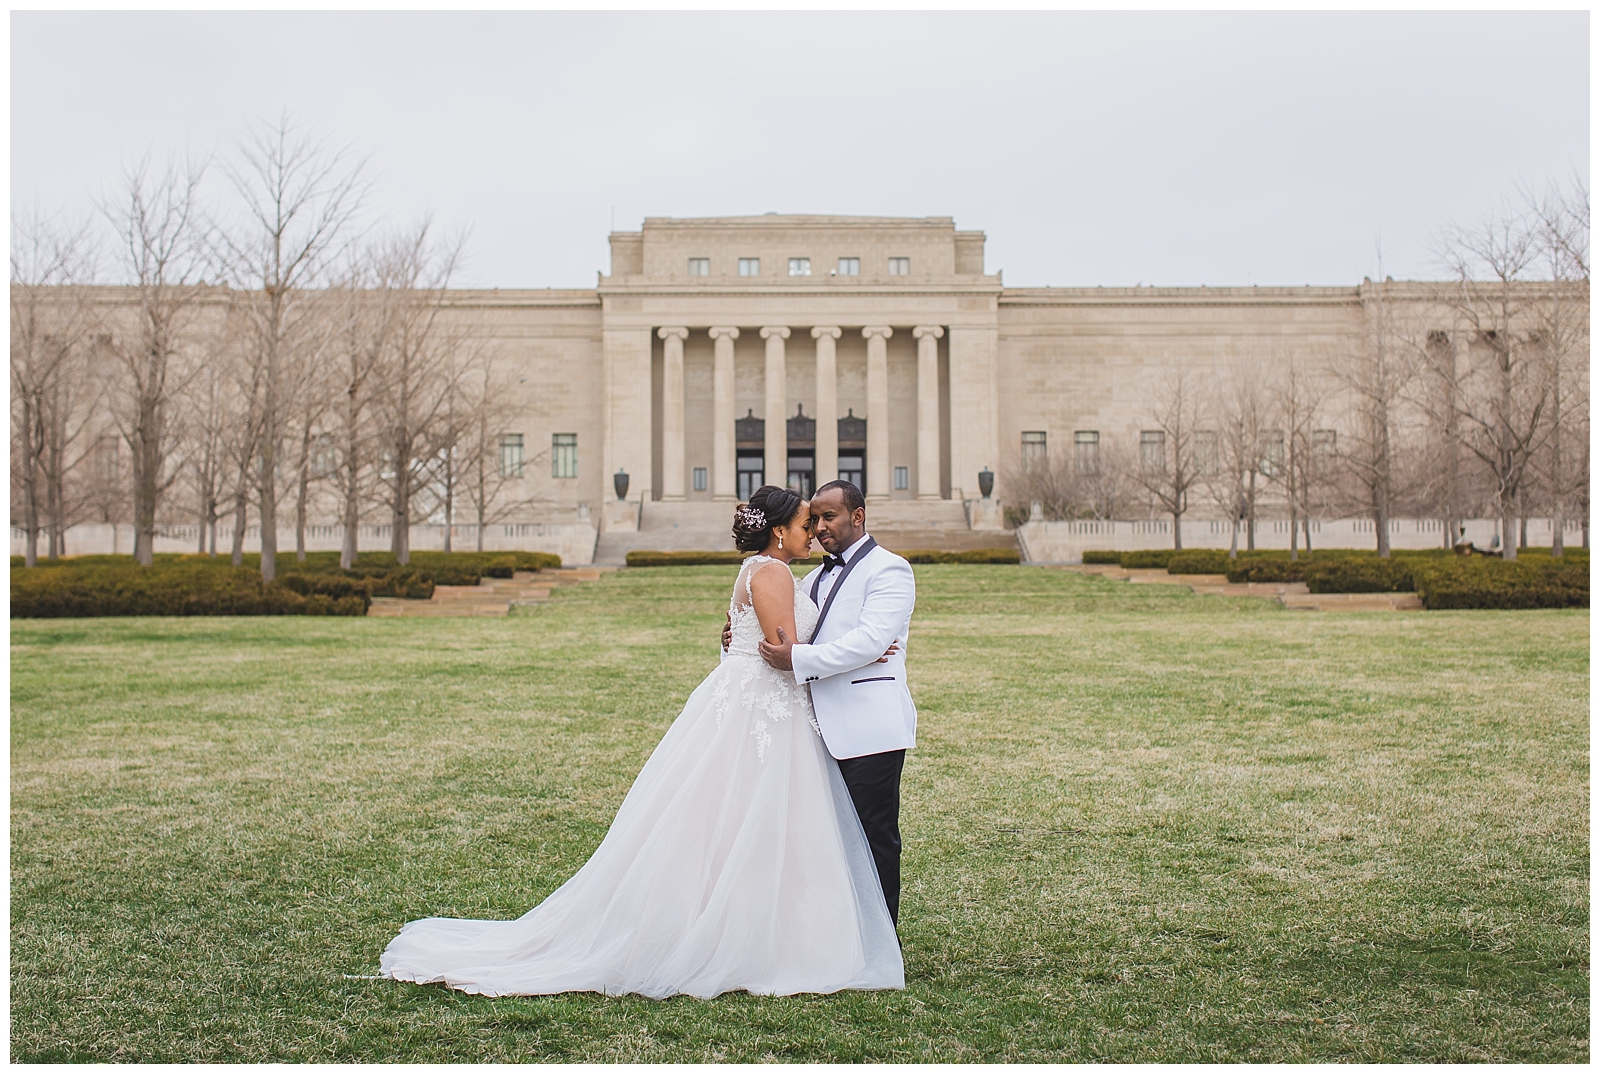 Bridal photography at the Nelson-Atkins Museum of Art by Kansas City wedding photographers Wisdom-Watson Weddings.